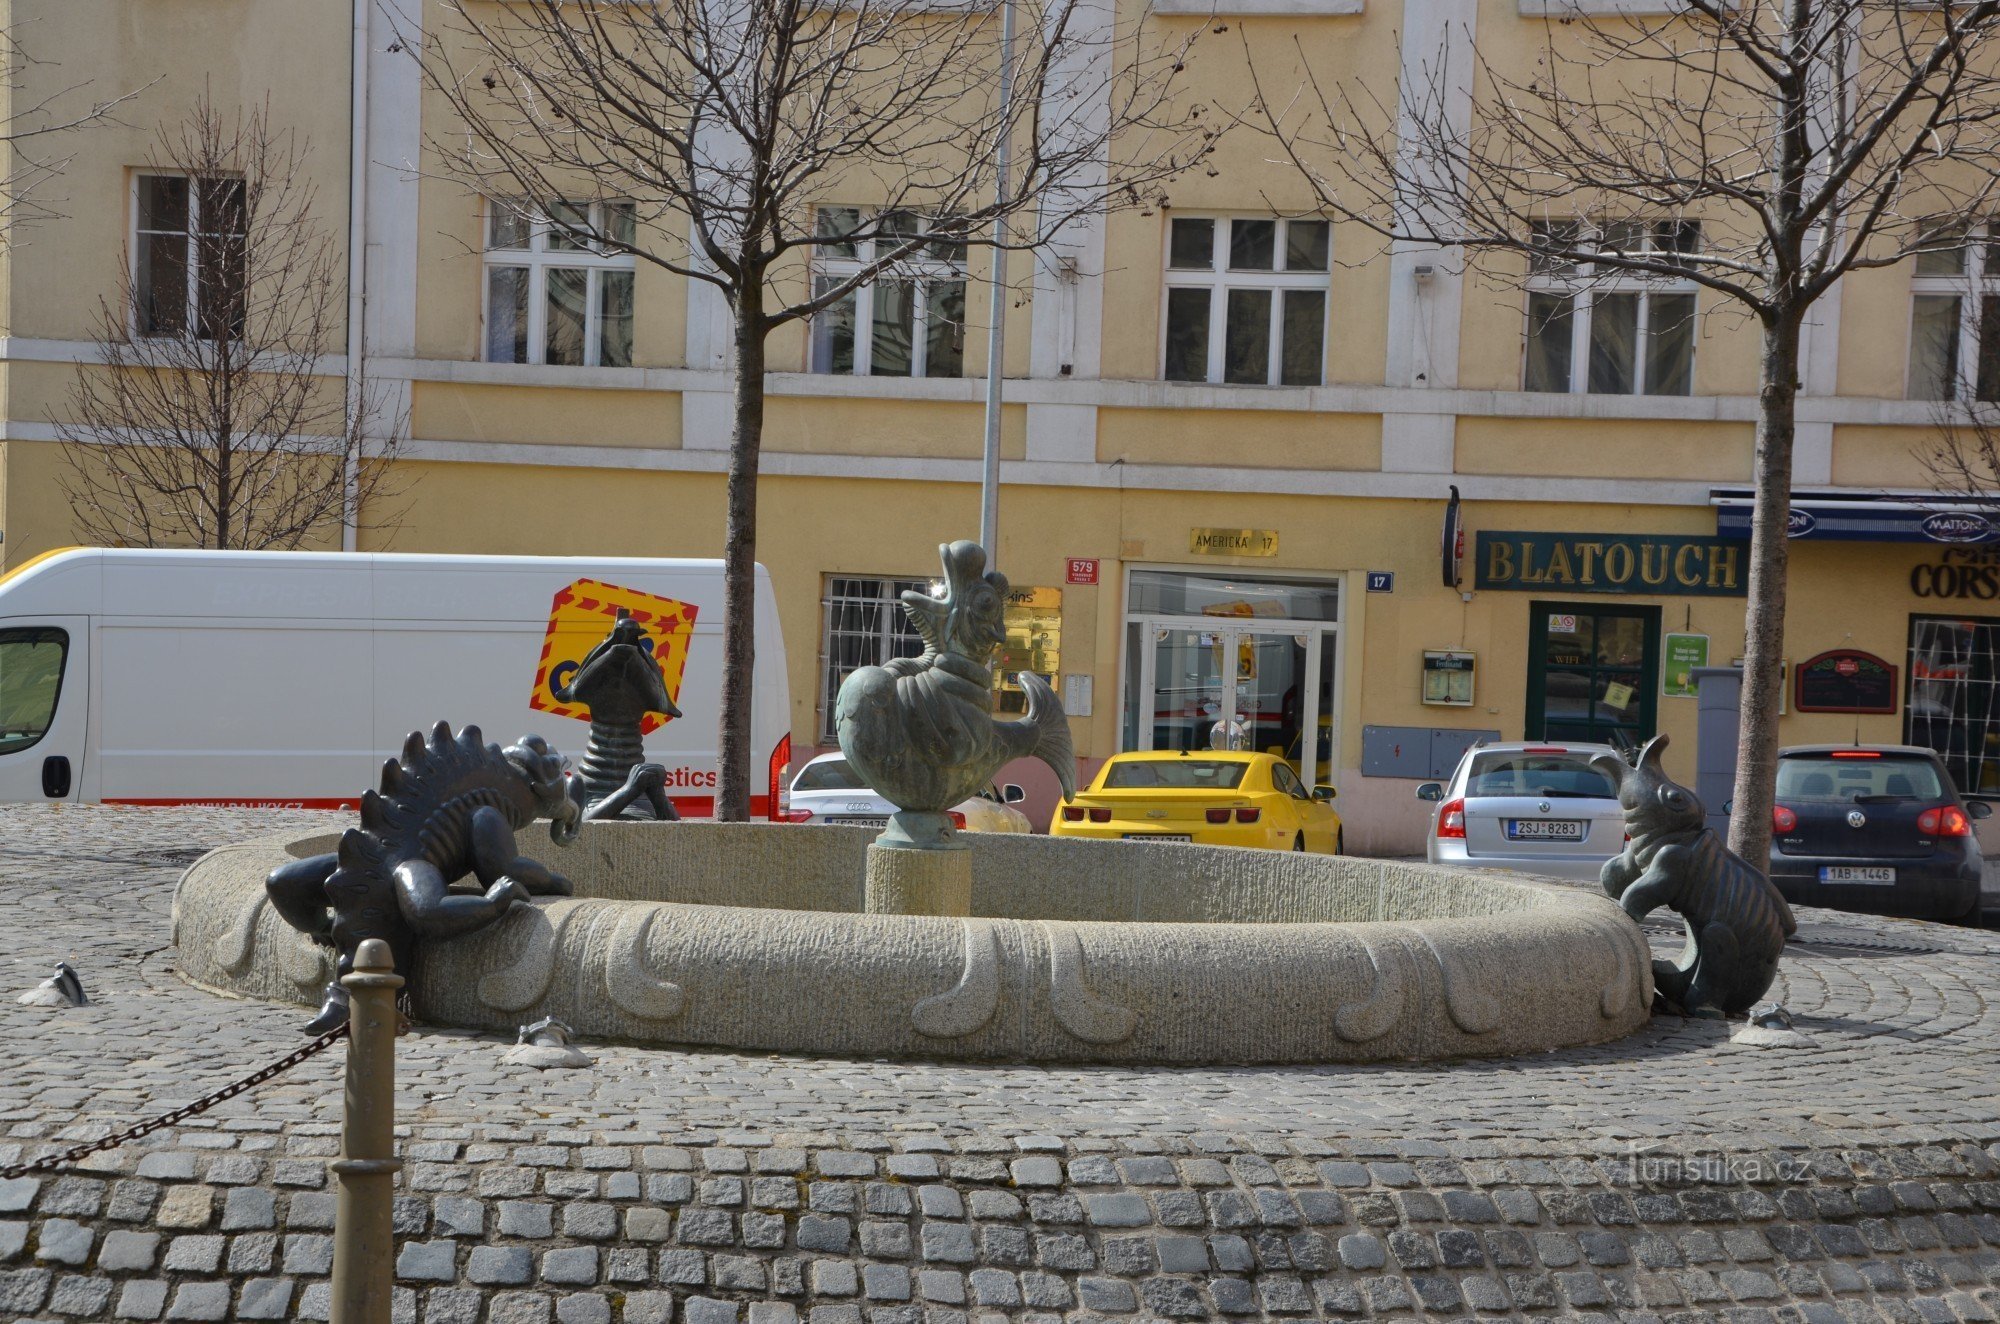 Praga - Fontana moderna sulla rotonda